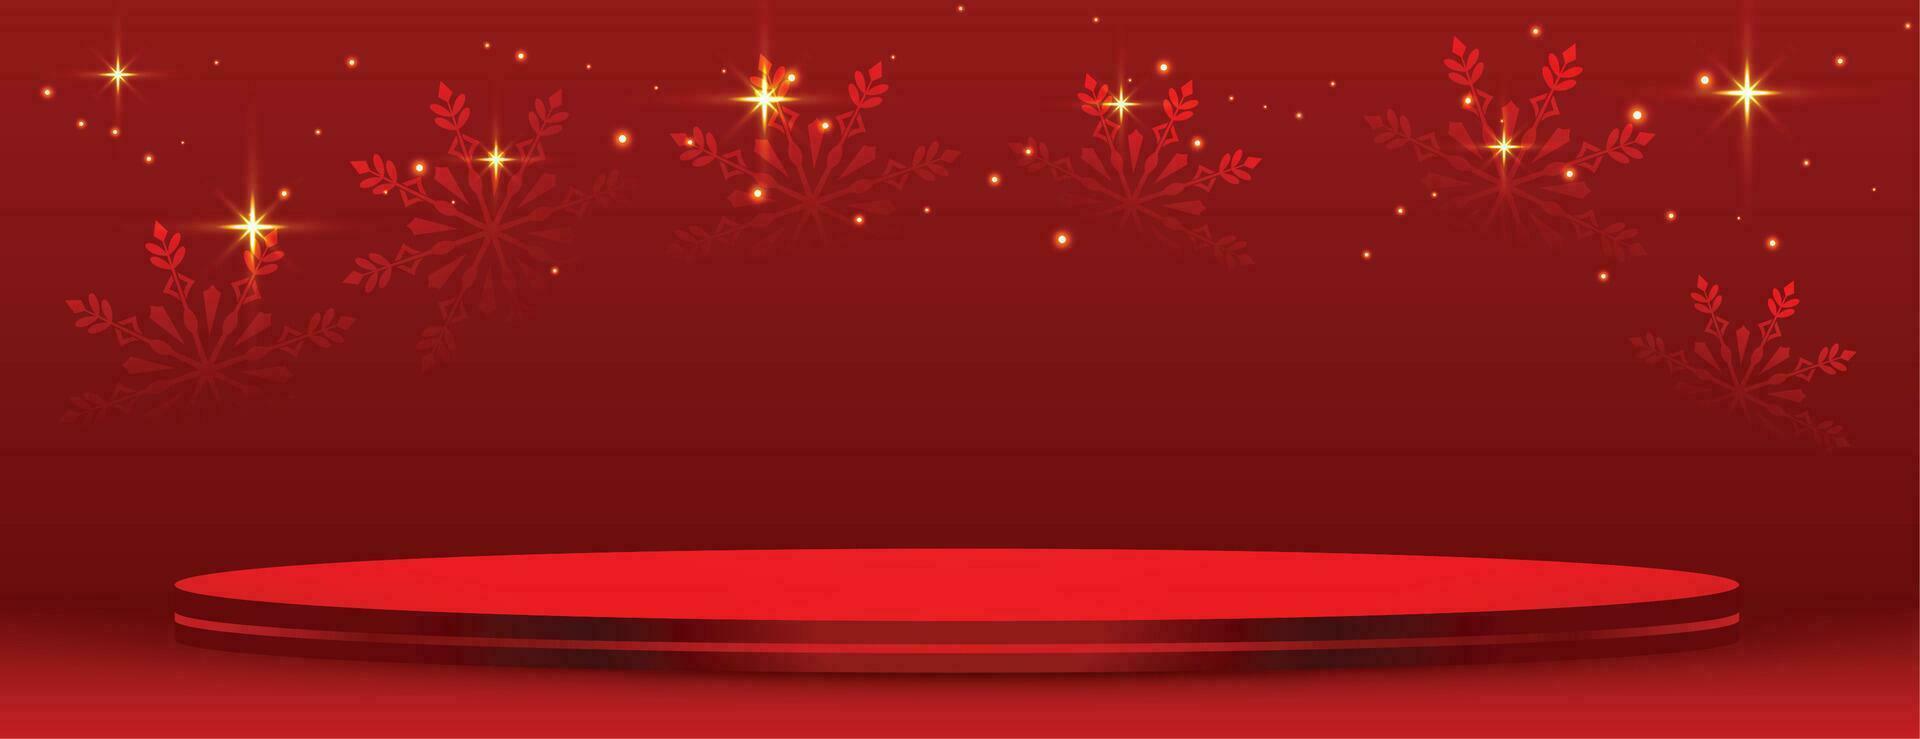 3d podium platform on red banner for merry christmas festival vector